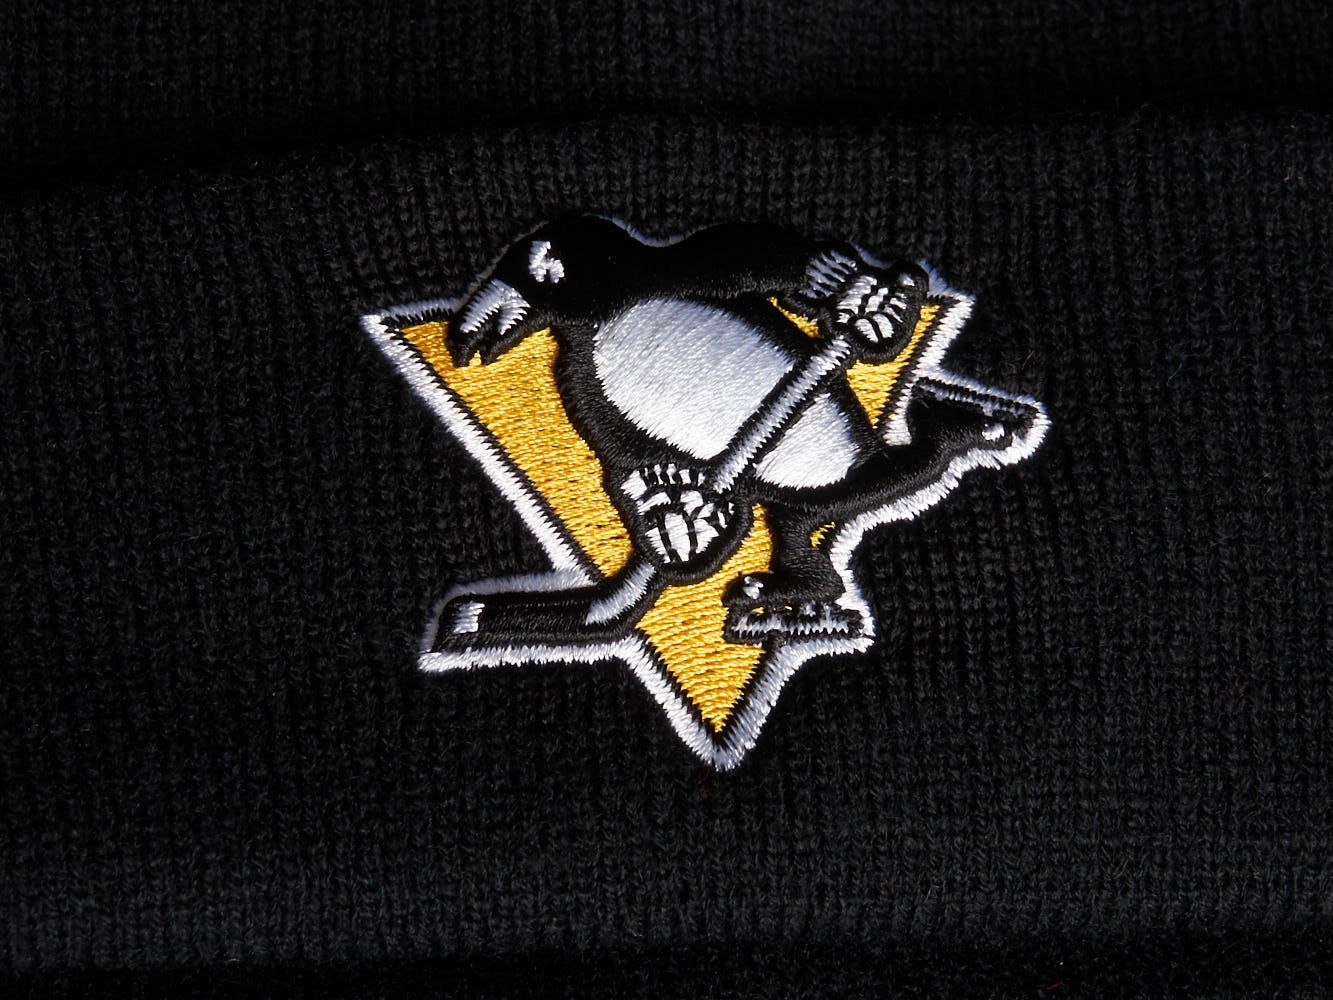  Atributika & club NHL Pittsburgh Penguins 59043 SR